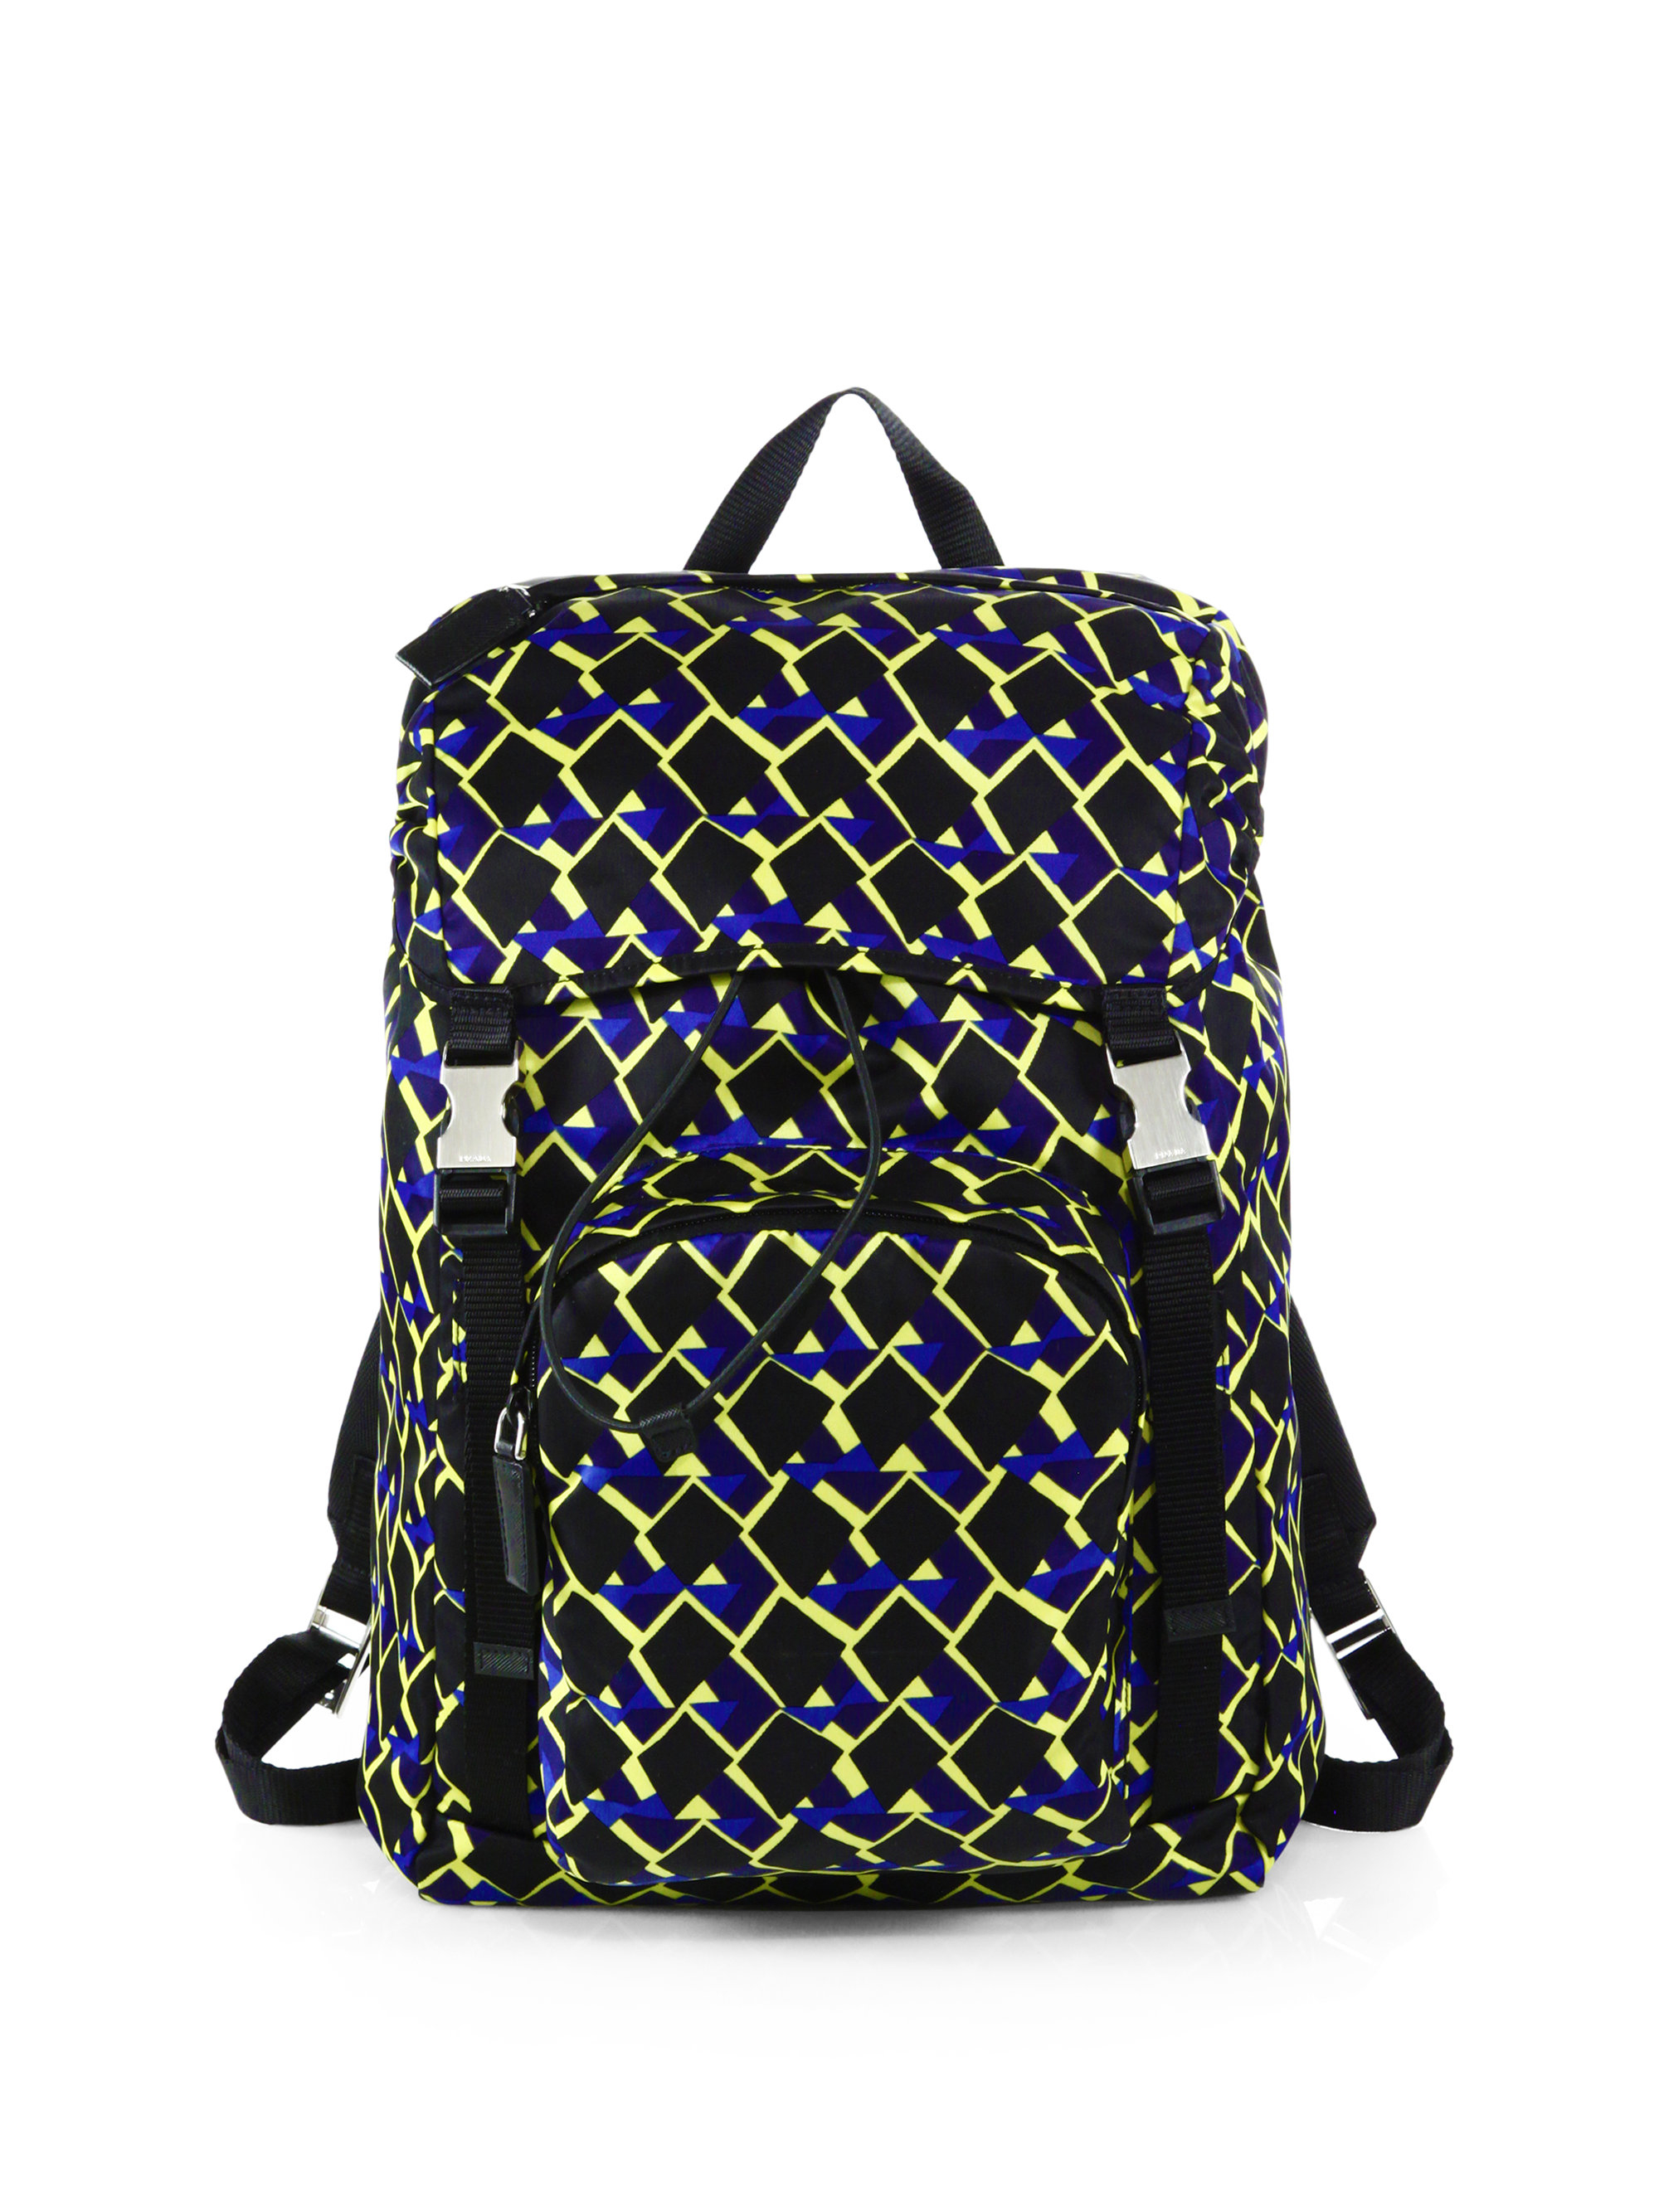 prada-multicolor-nylon-argyle-print-backpack-product-1-27628809-2-559519145-normal.jpeg  